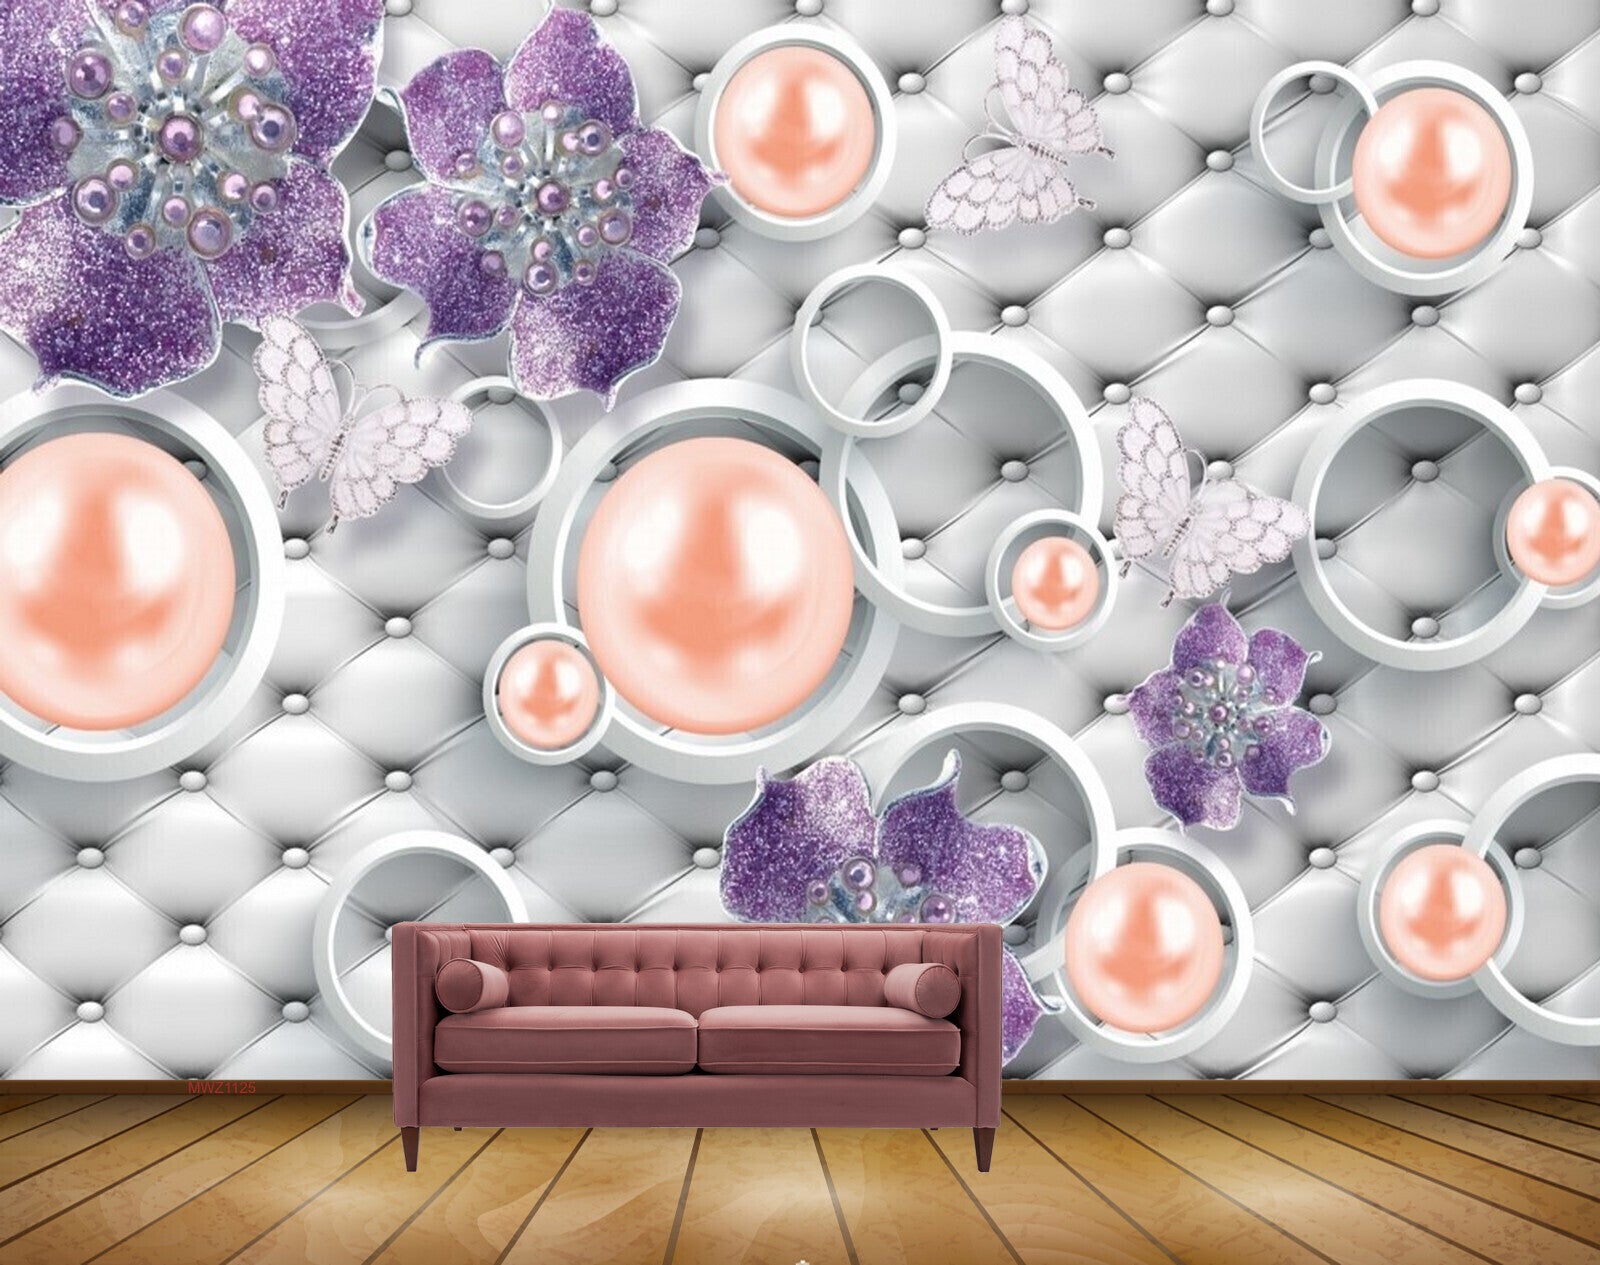 Avikalp MWZ1125 Purple Flowers Butterflies Pearls 3D HD Wallpaper